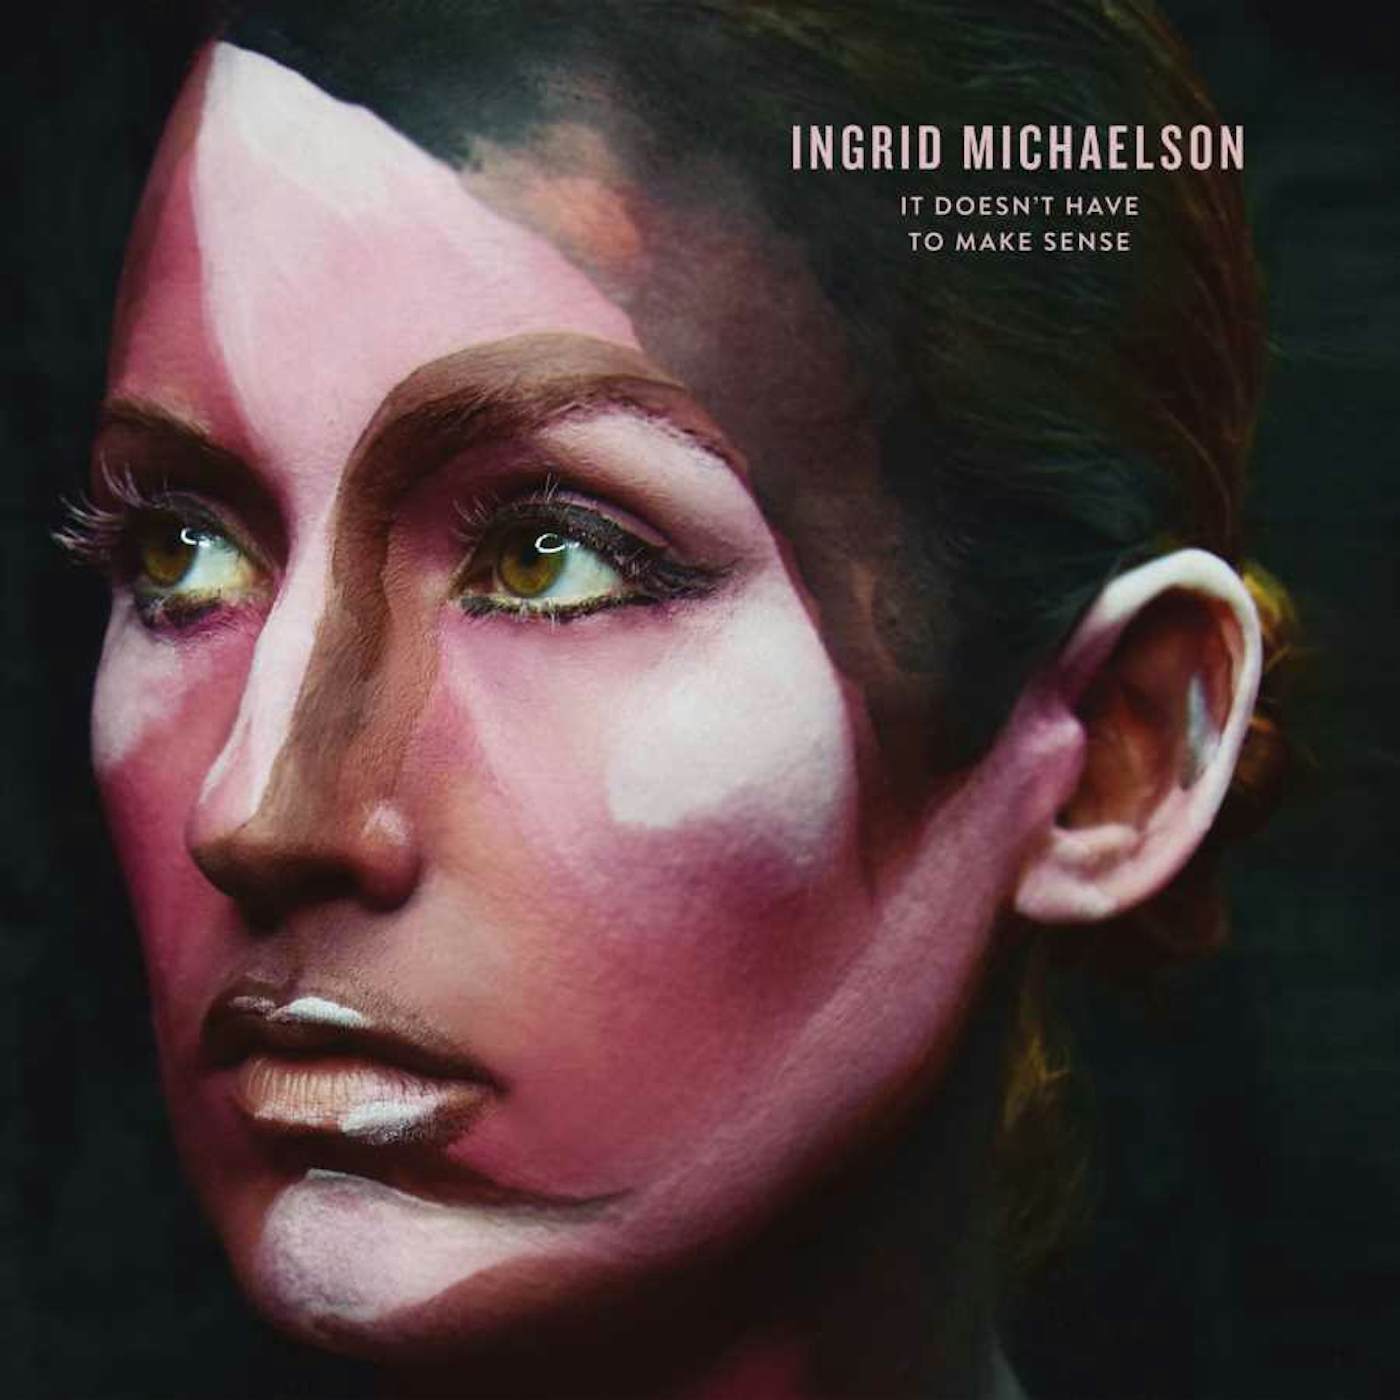 Ingrid Michaelson It Doesn't Have To Make Sense Vinyl Record